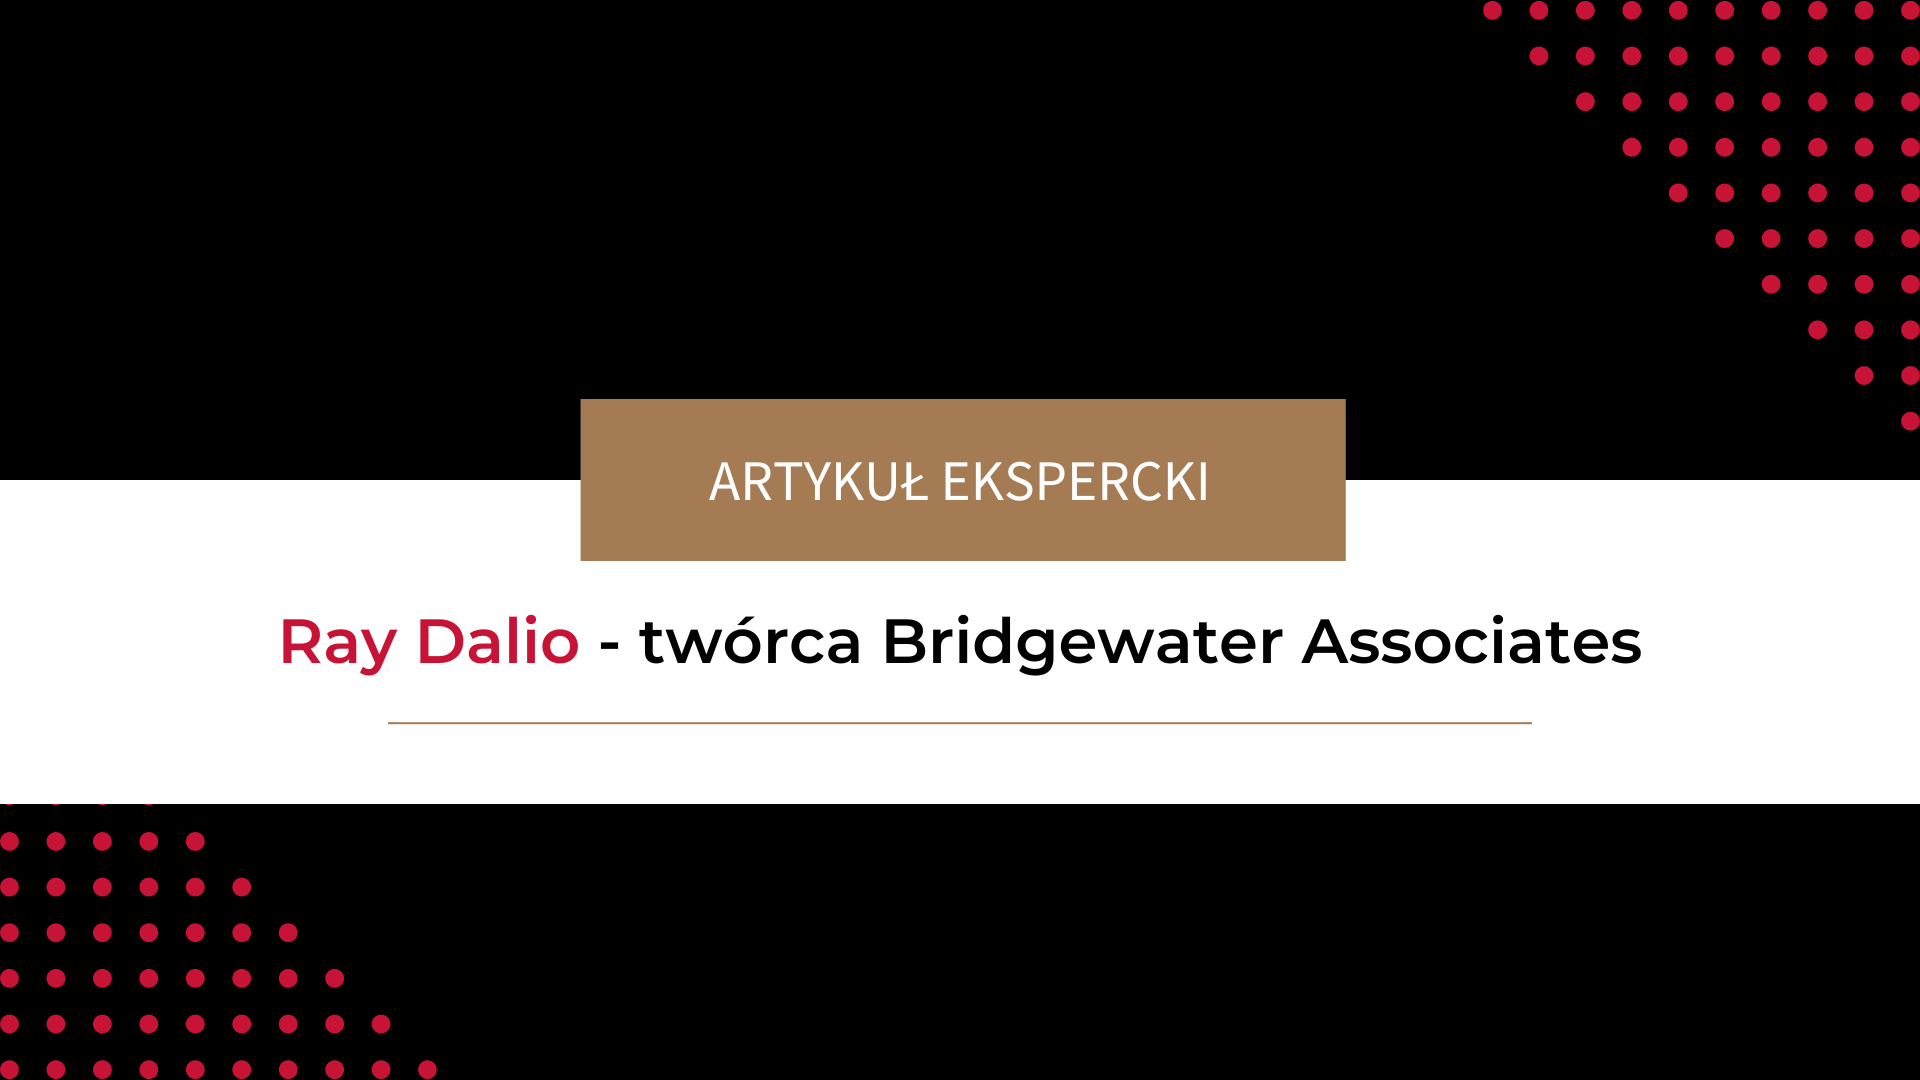 Ray Dalio – twórca Bridgewater Associates – artykuł ekspercki